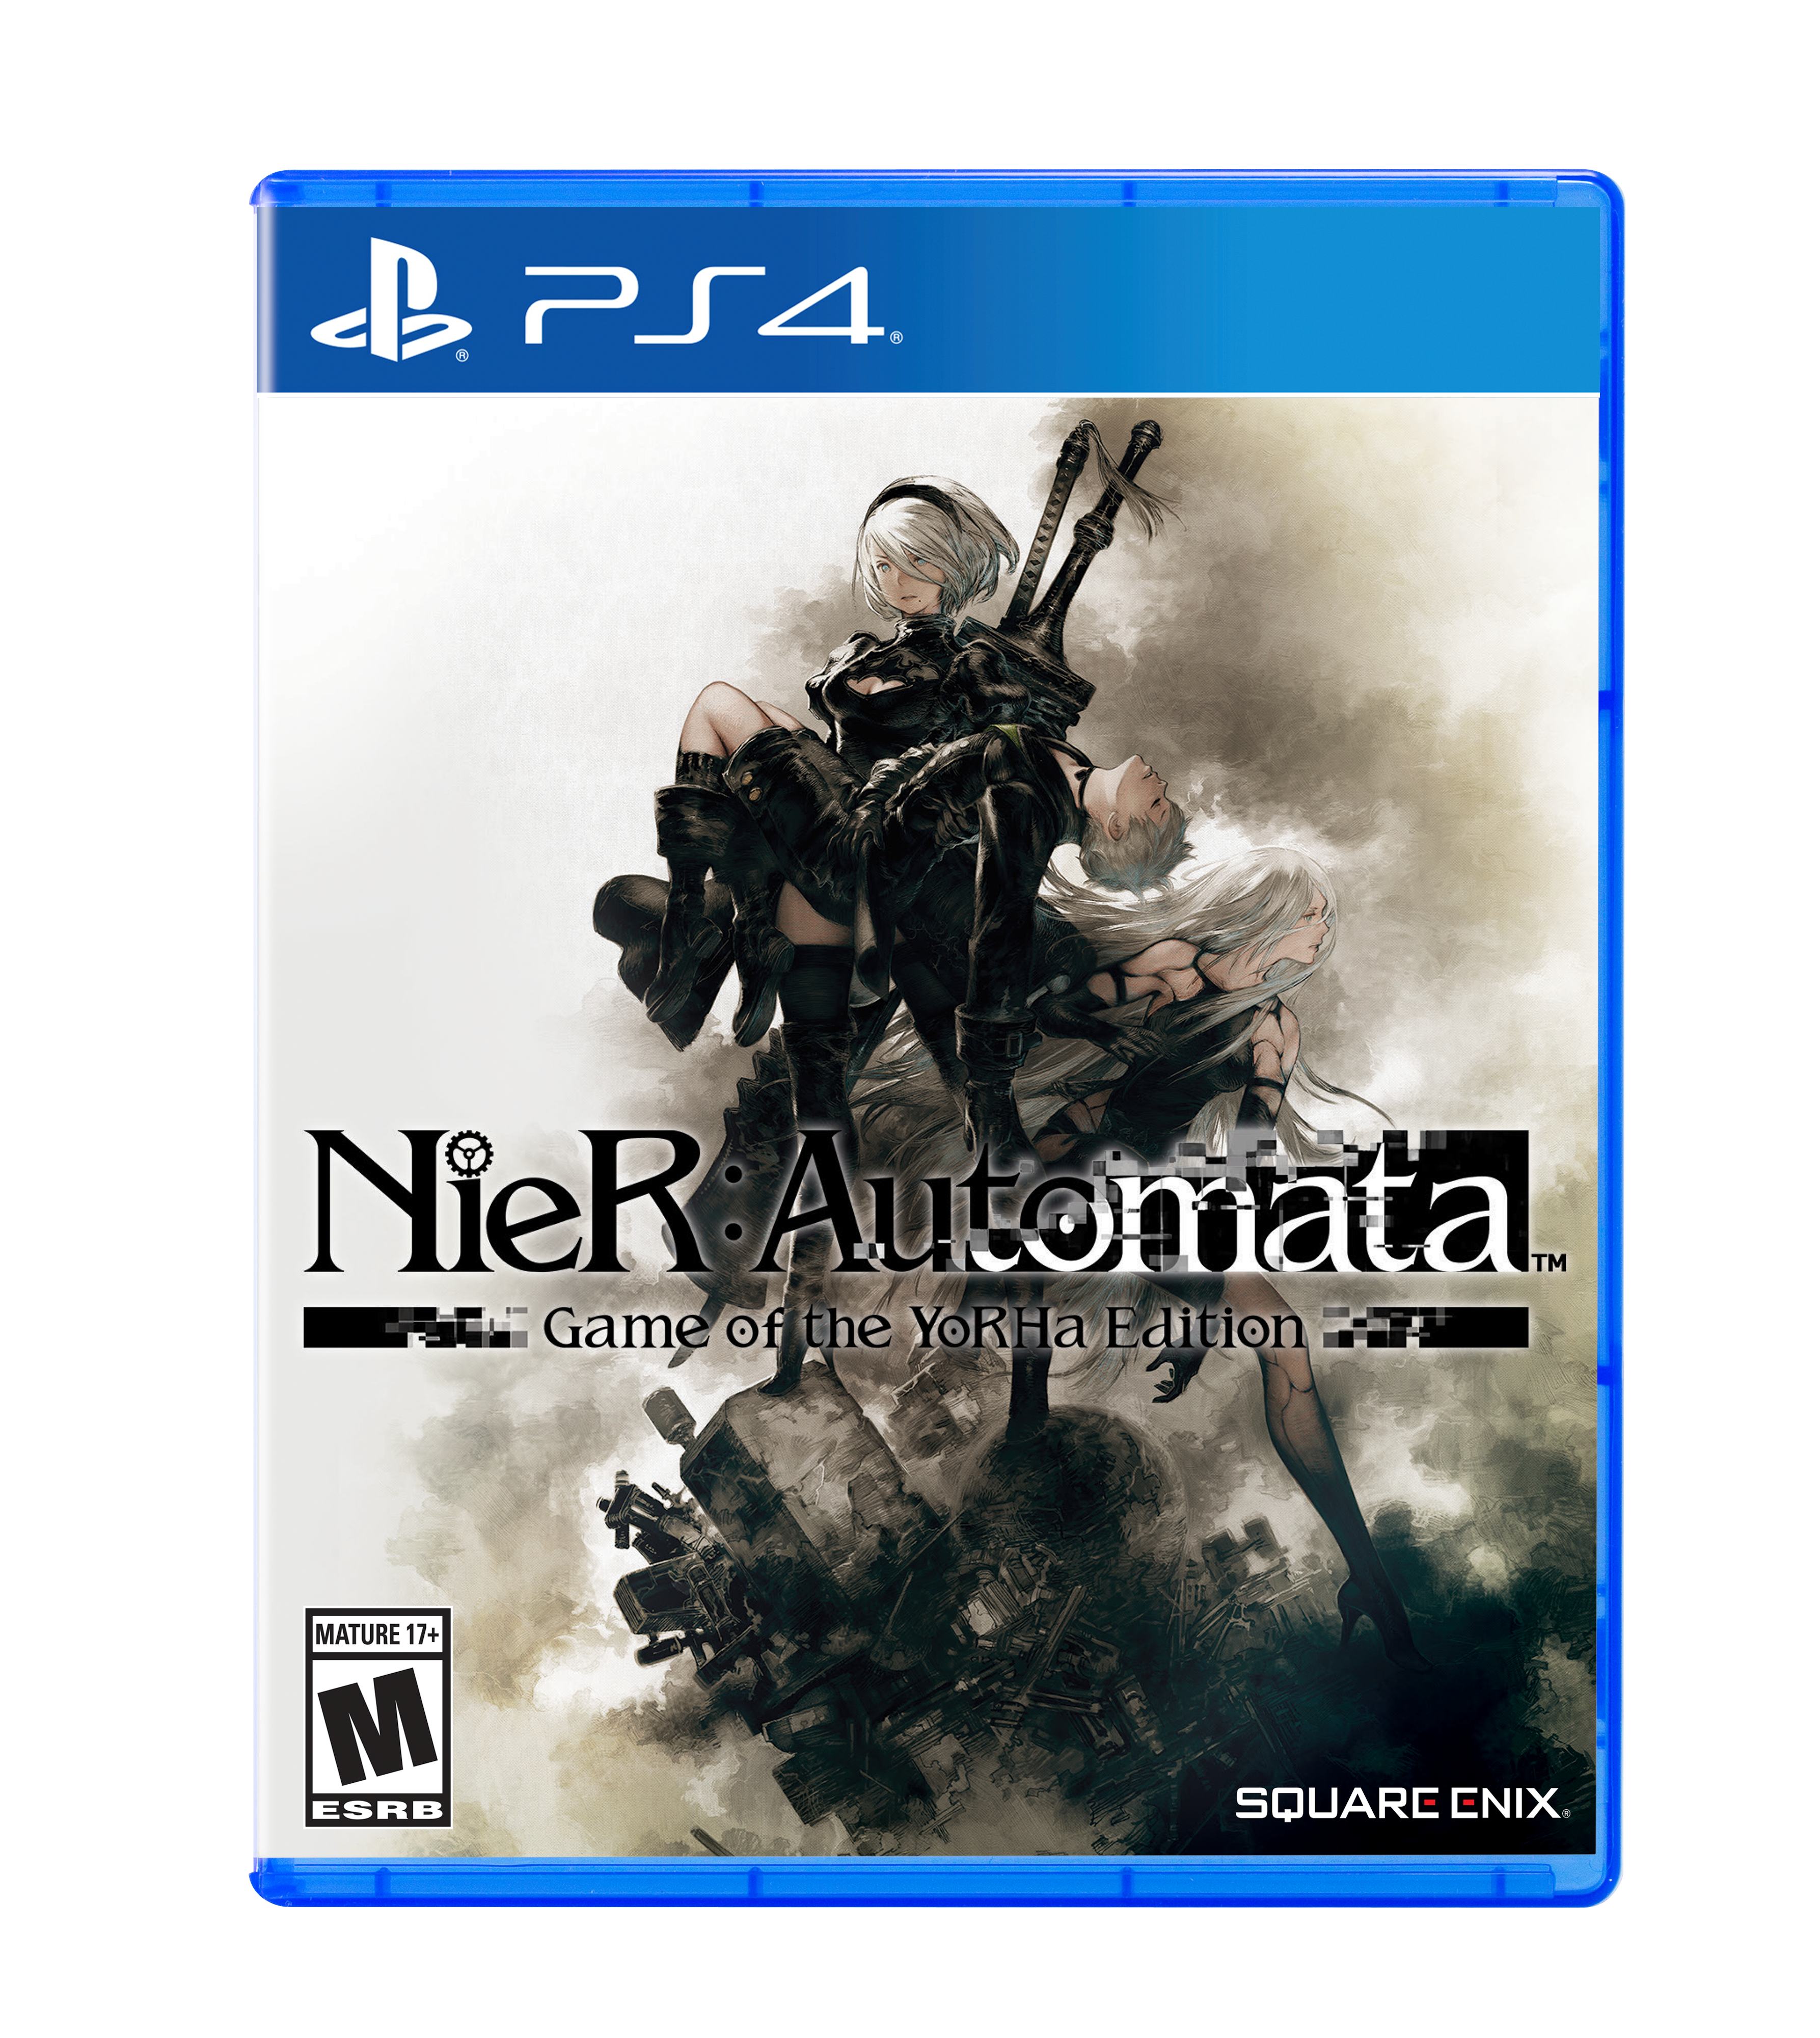 NieR: Automata Game Review